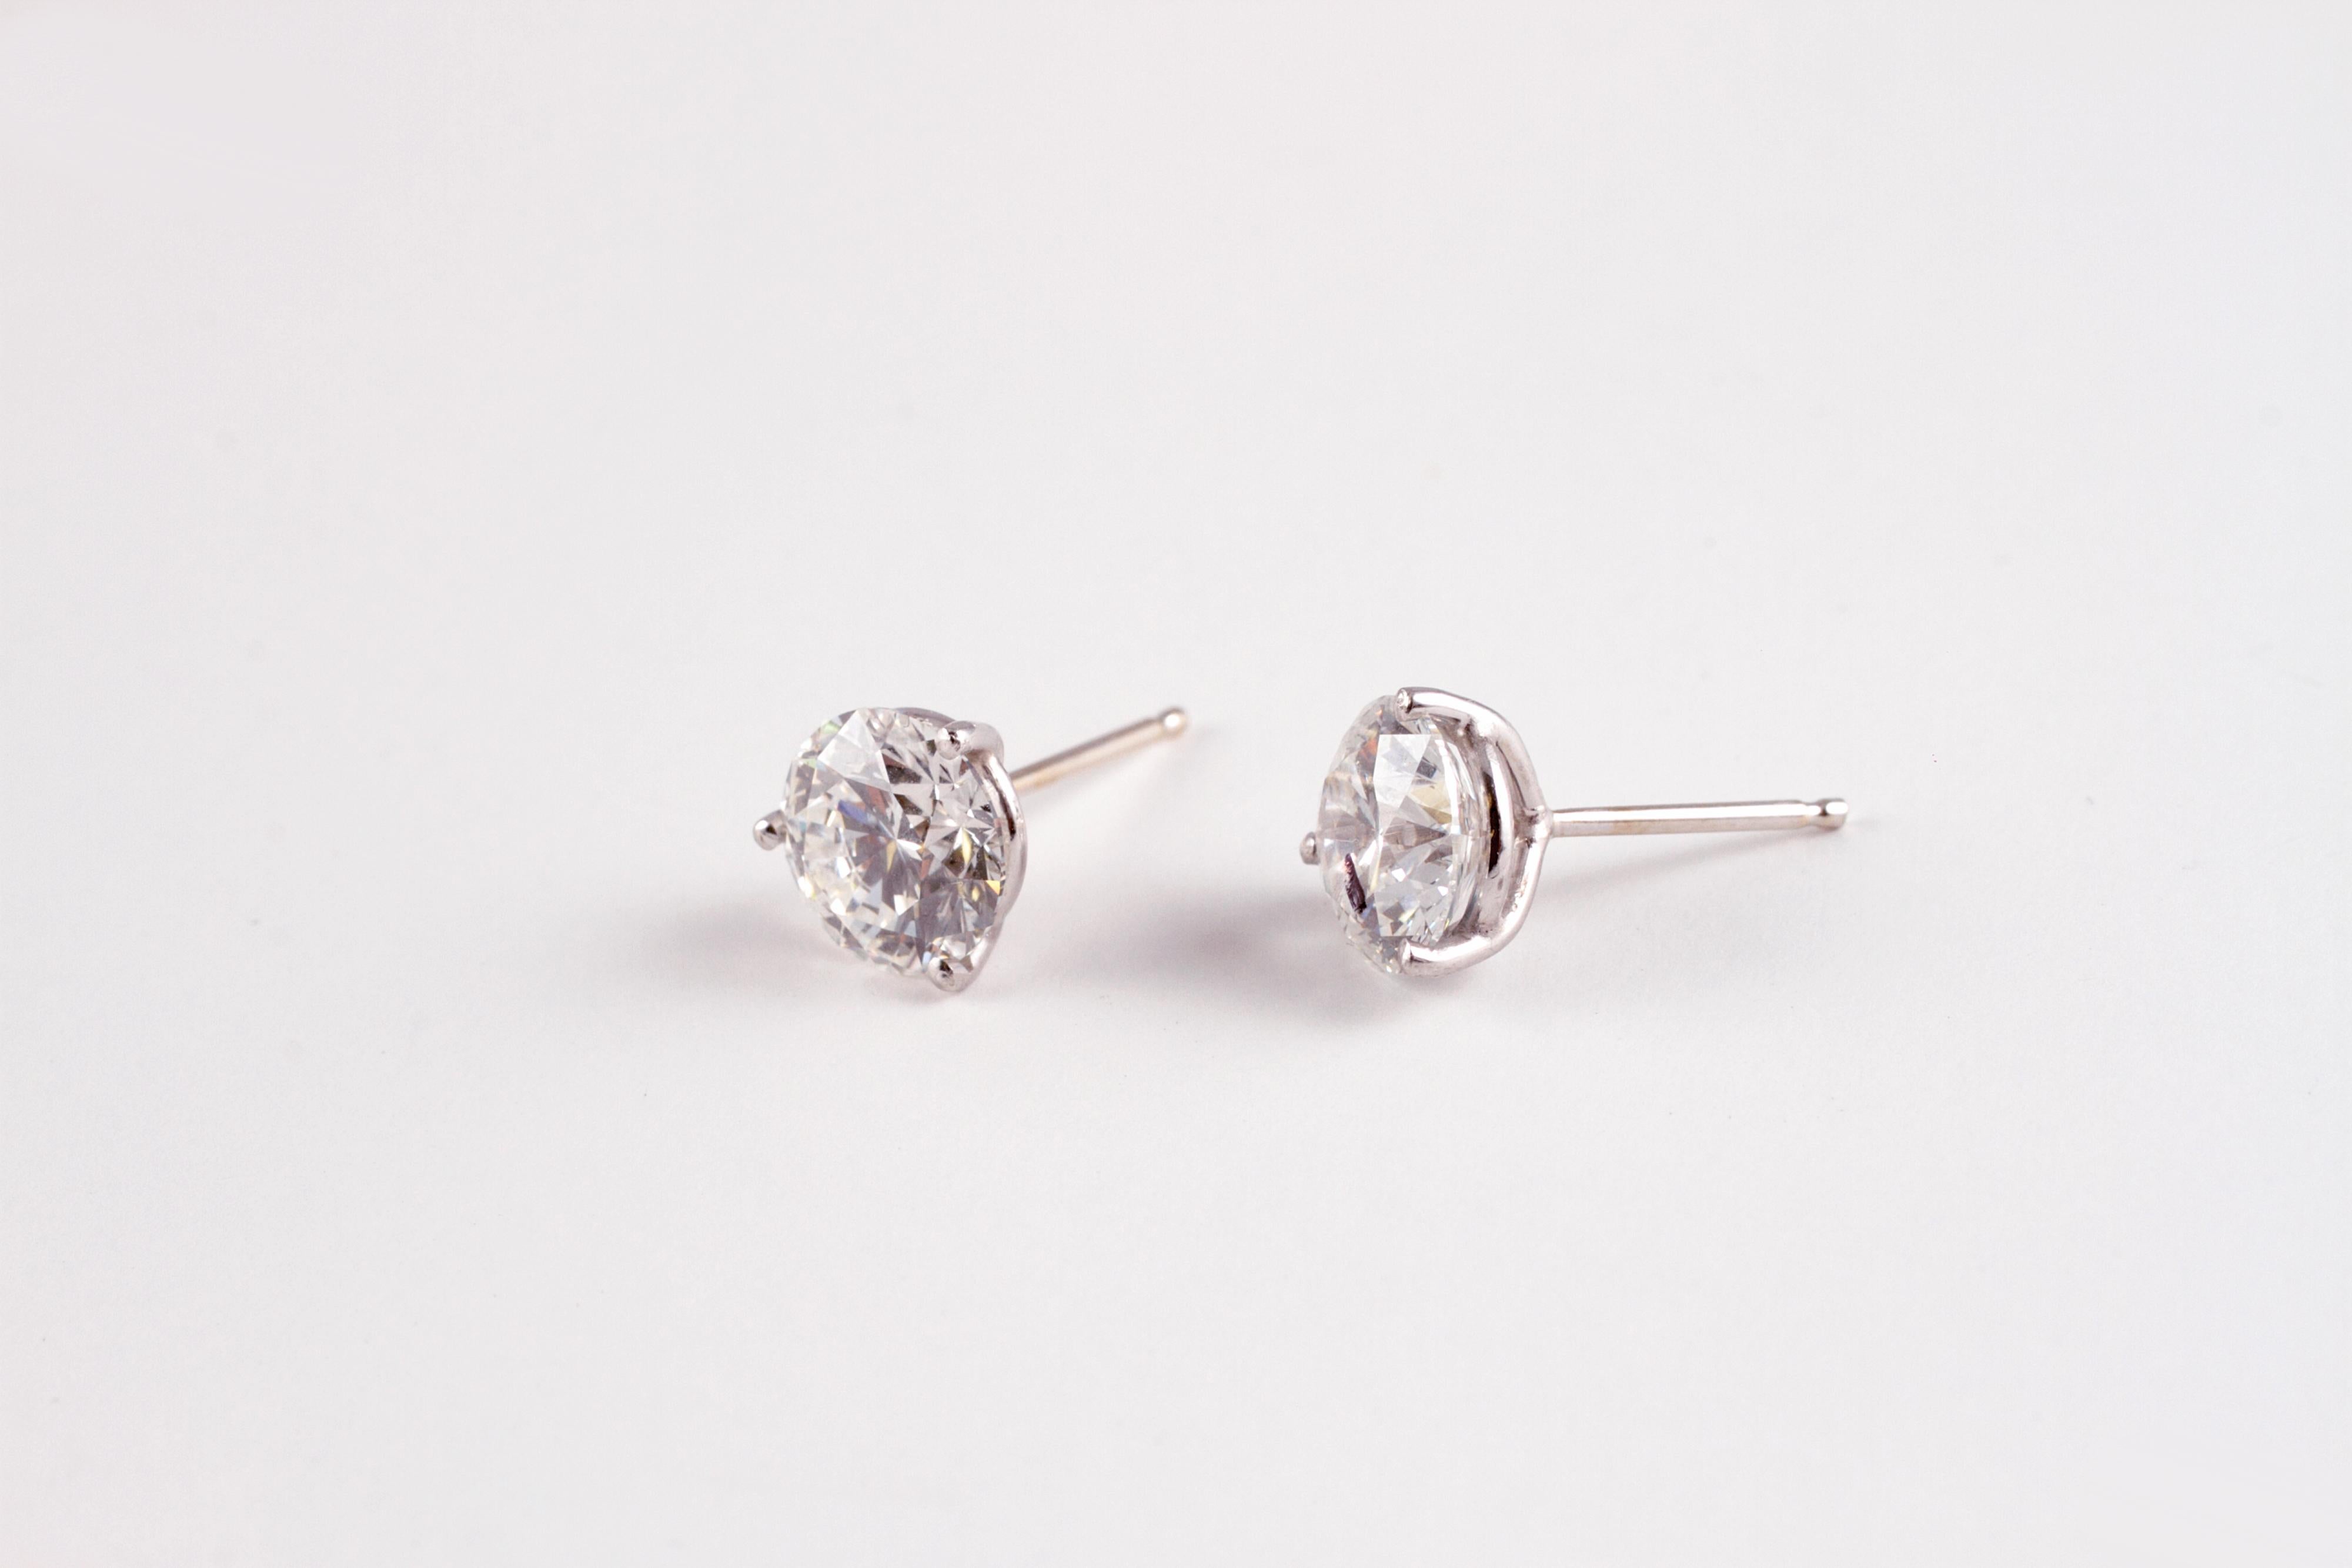 2 carat diamond earrings tiffany